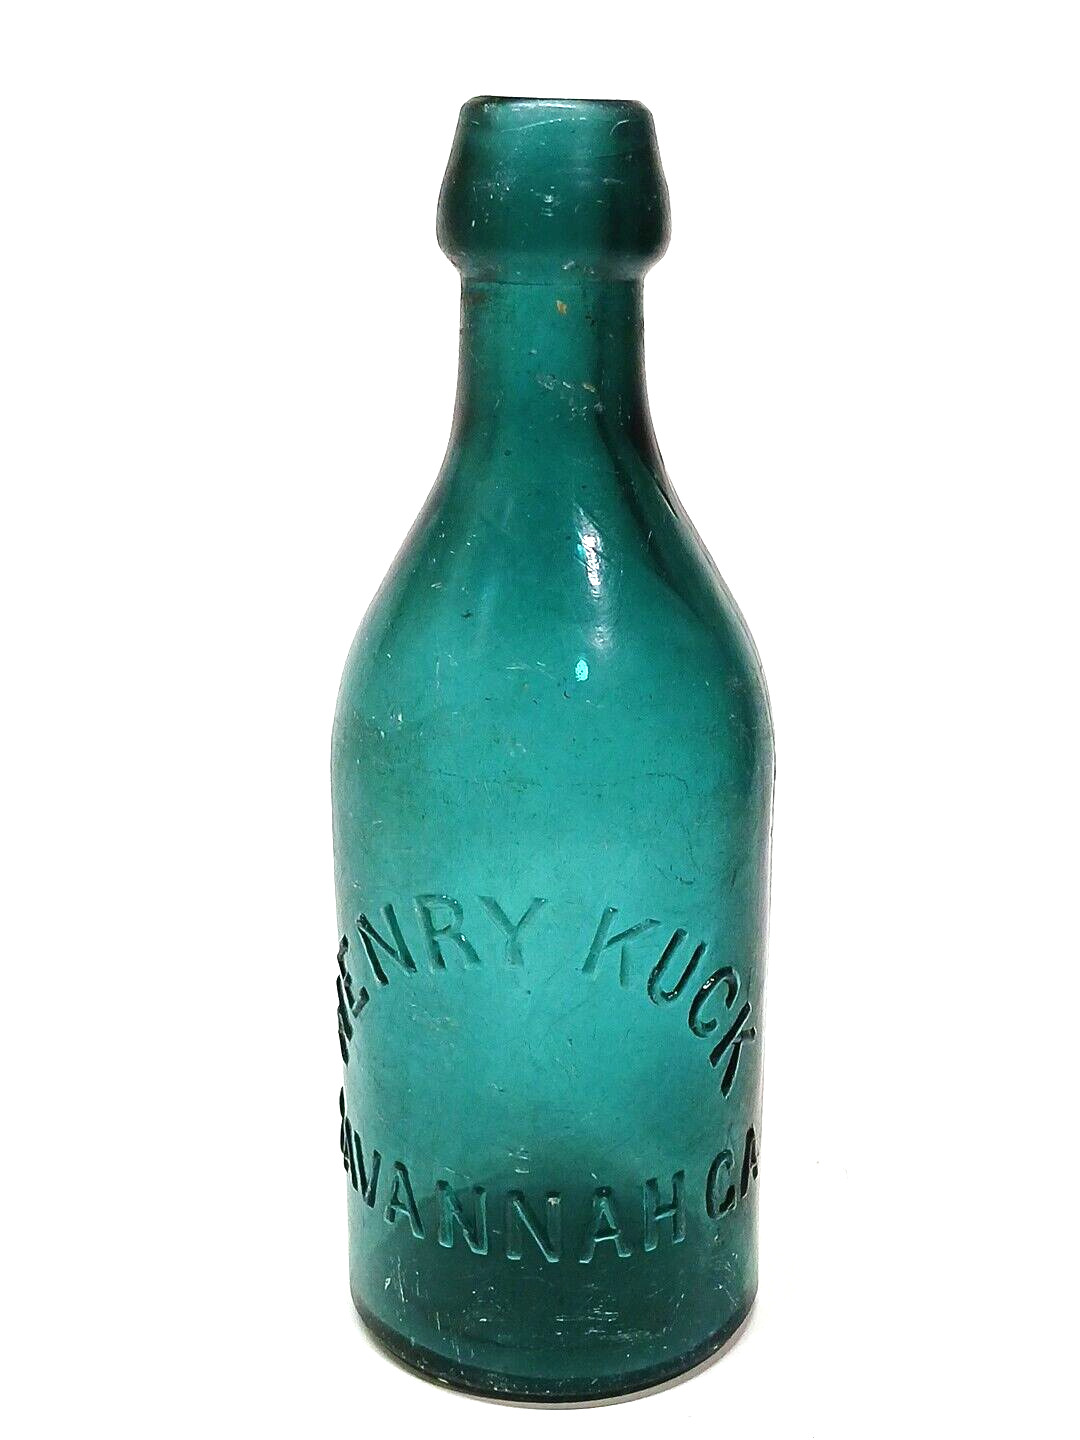 Henry Kuck Savannah Ga Teal Green Aqua Glass Soda Bottle 